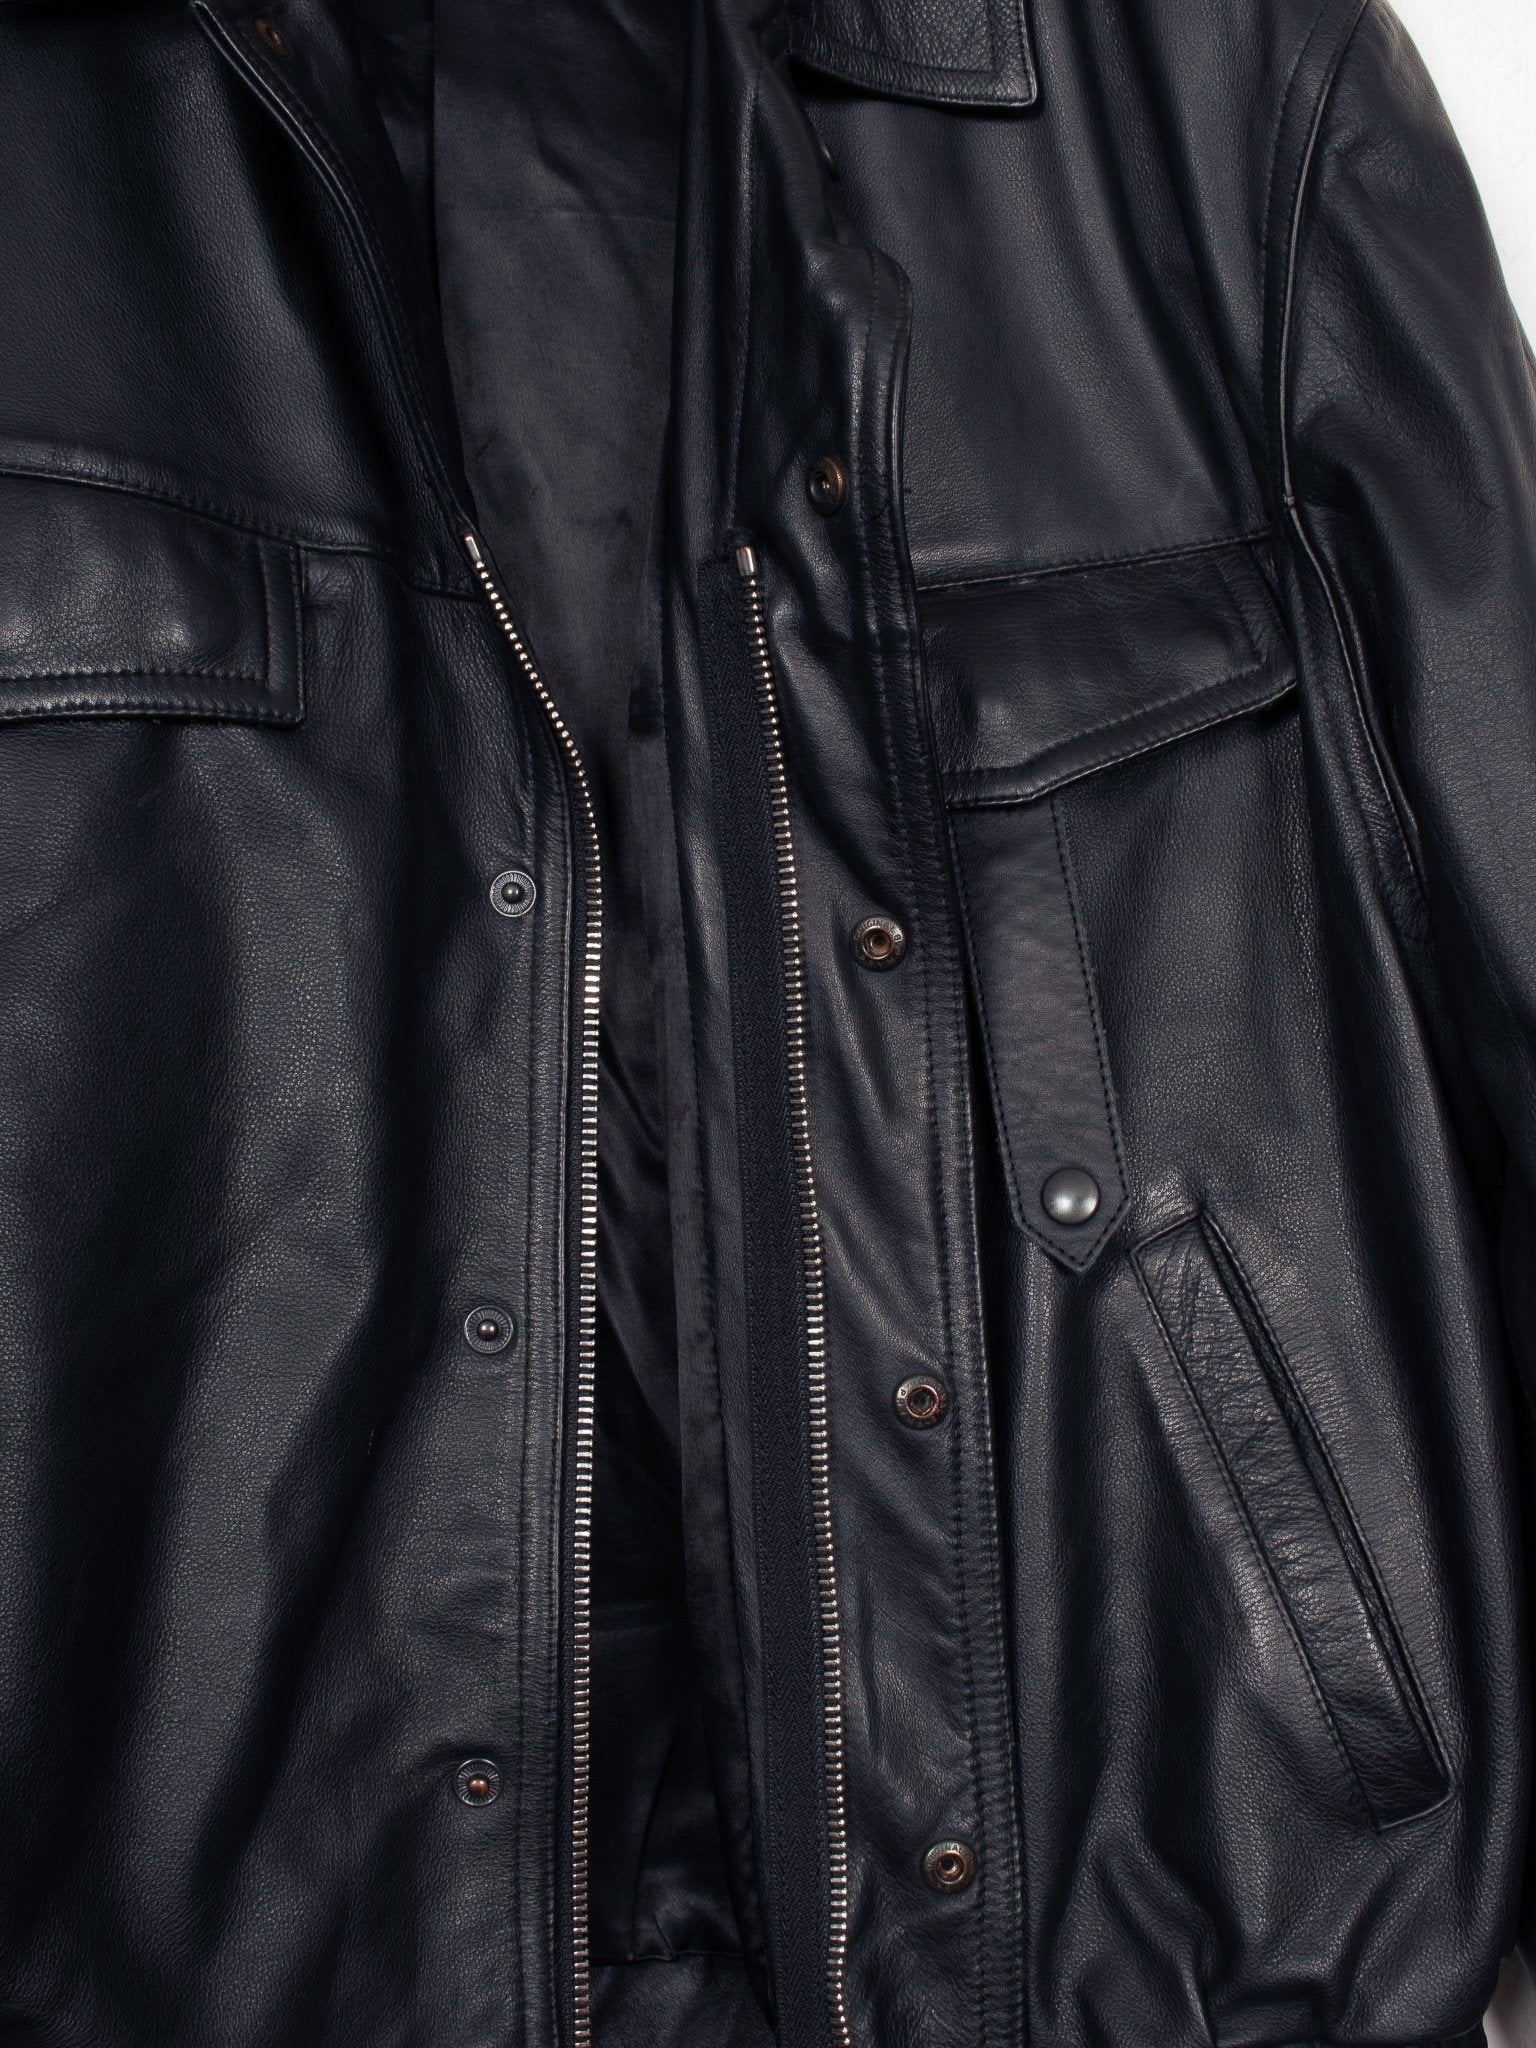 vintage 90s German Polizei Leather Service Jacket